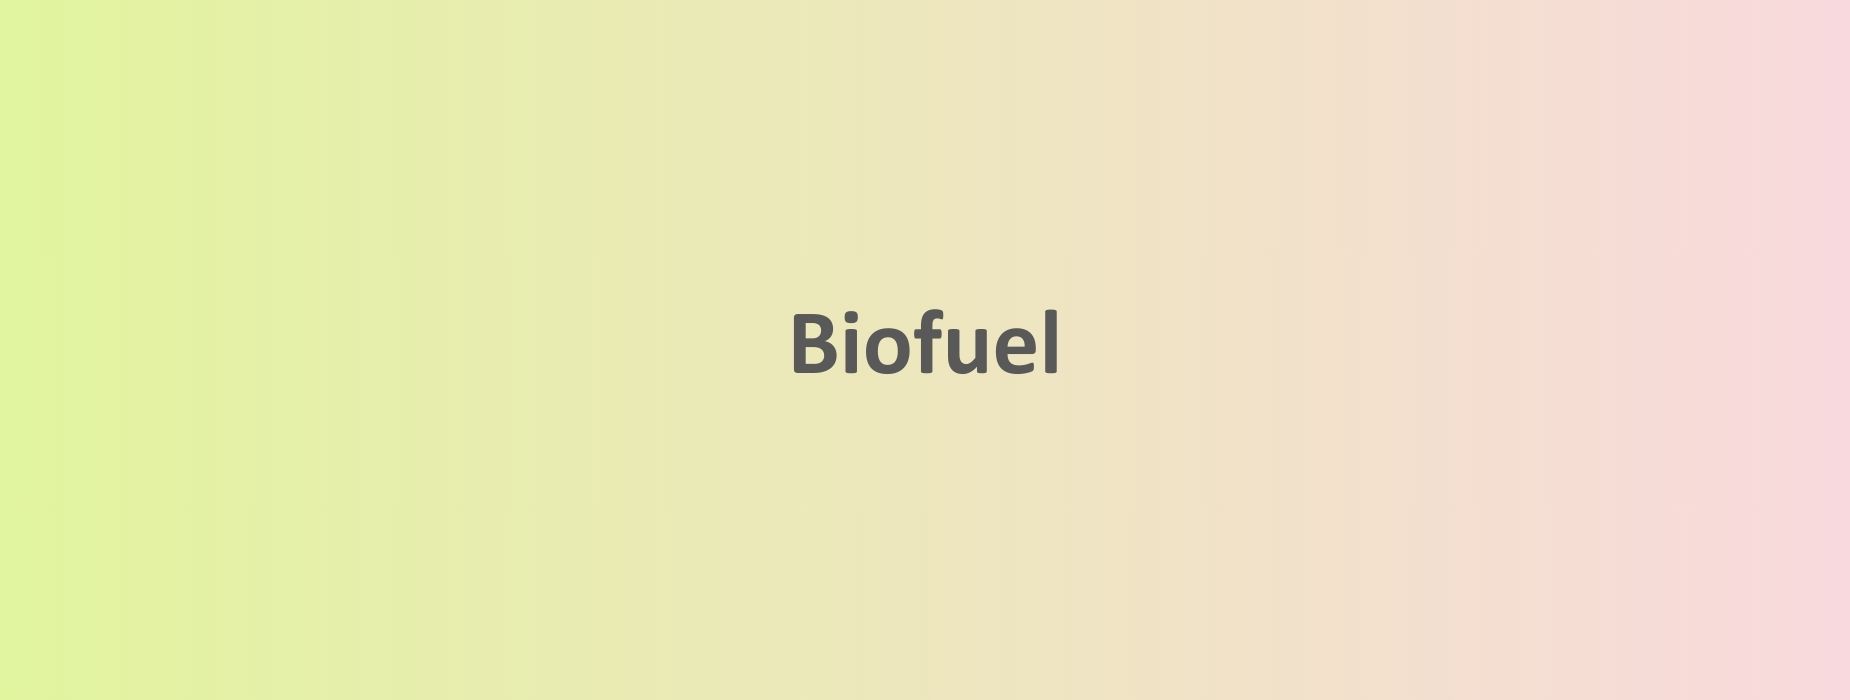 Biofuel - SustainoMetric, ESG Data and Solutions Provider company